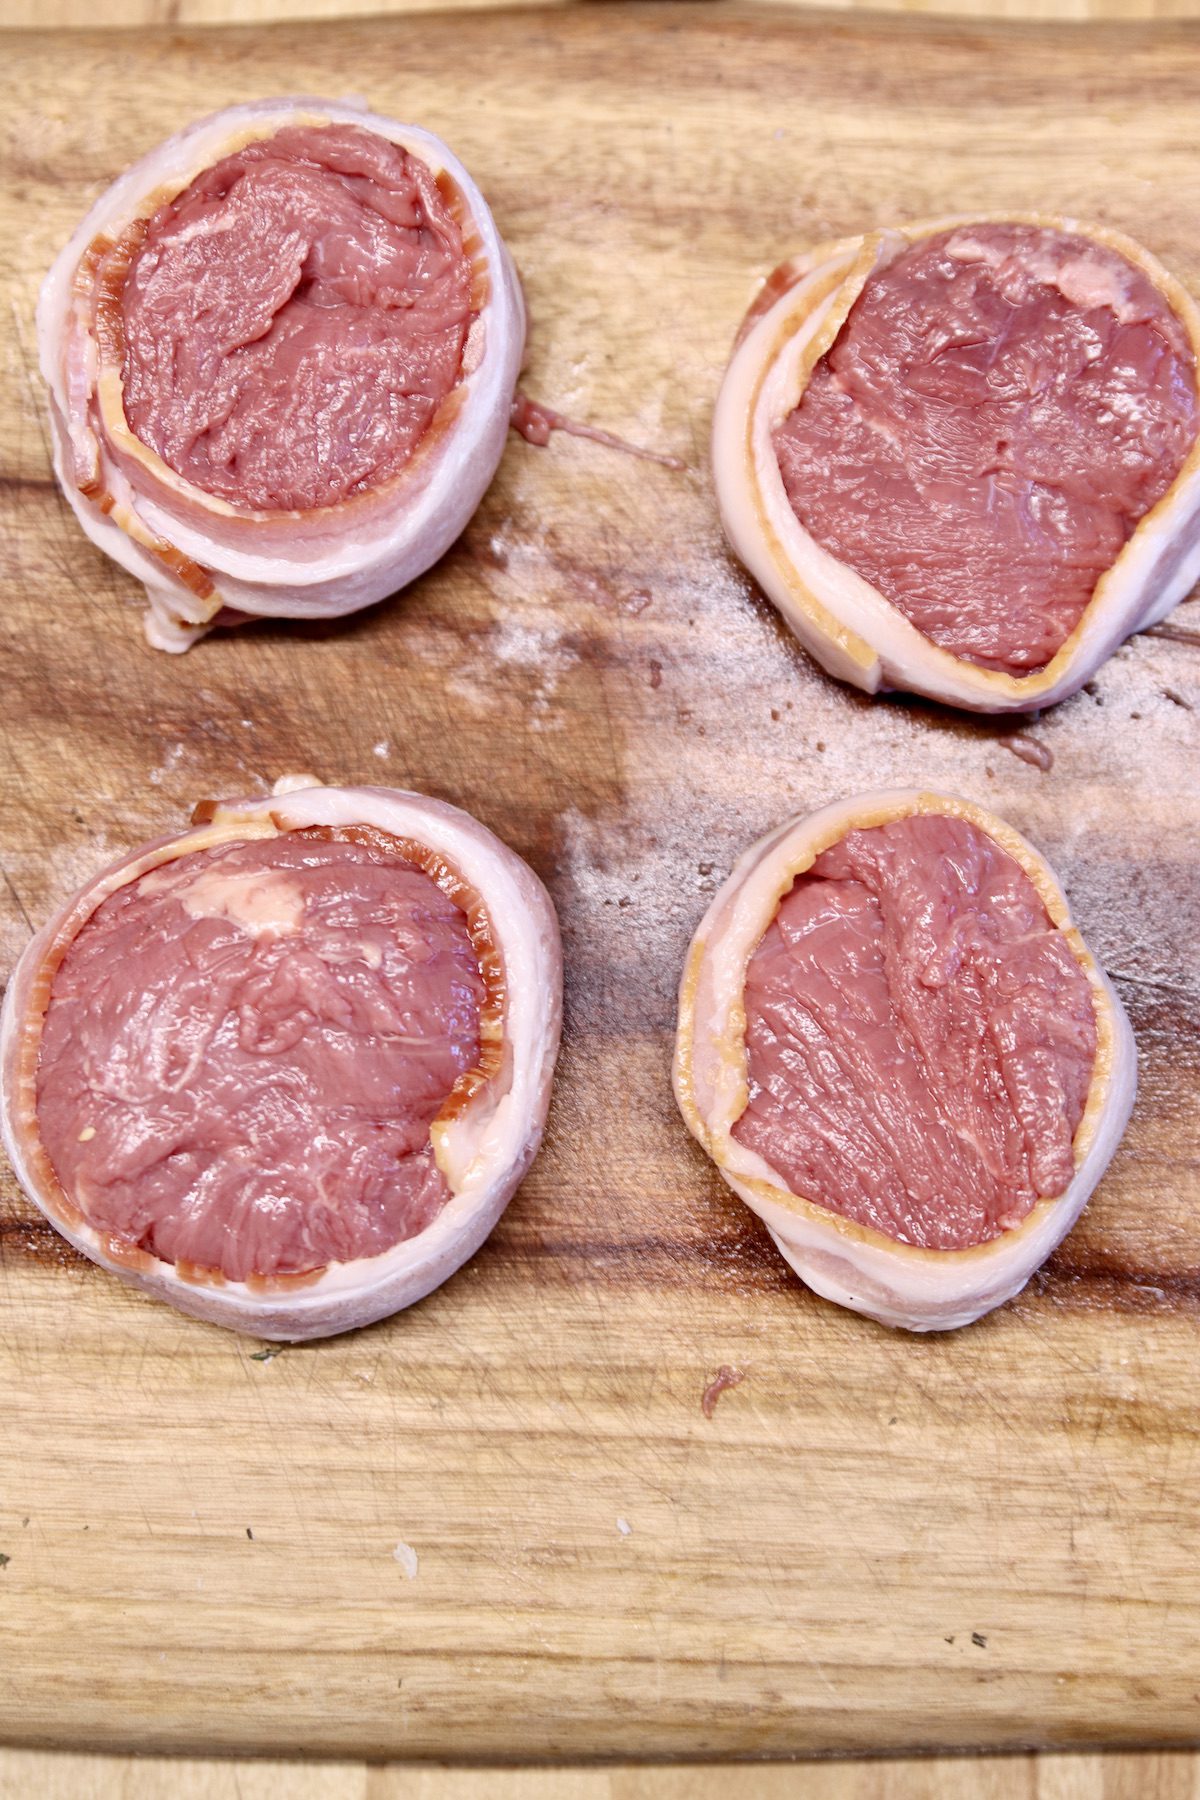 4 raw - bacon wrapped filet mignon steaks